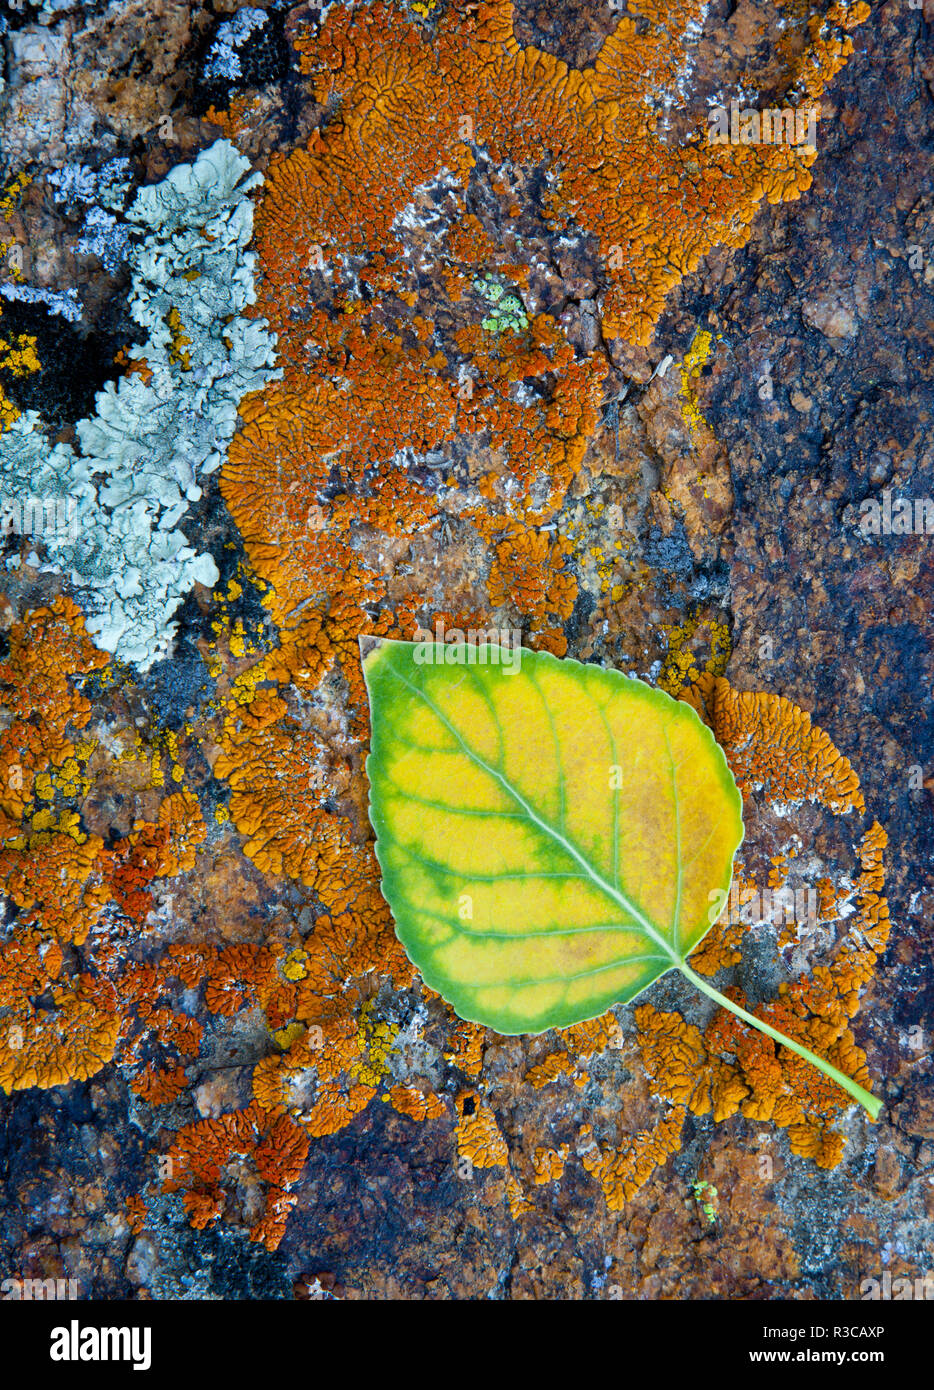 Lichen and fallen cottonwood leaf on rocks in Alabama Hills, California Stock Photo